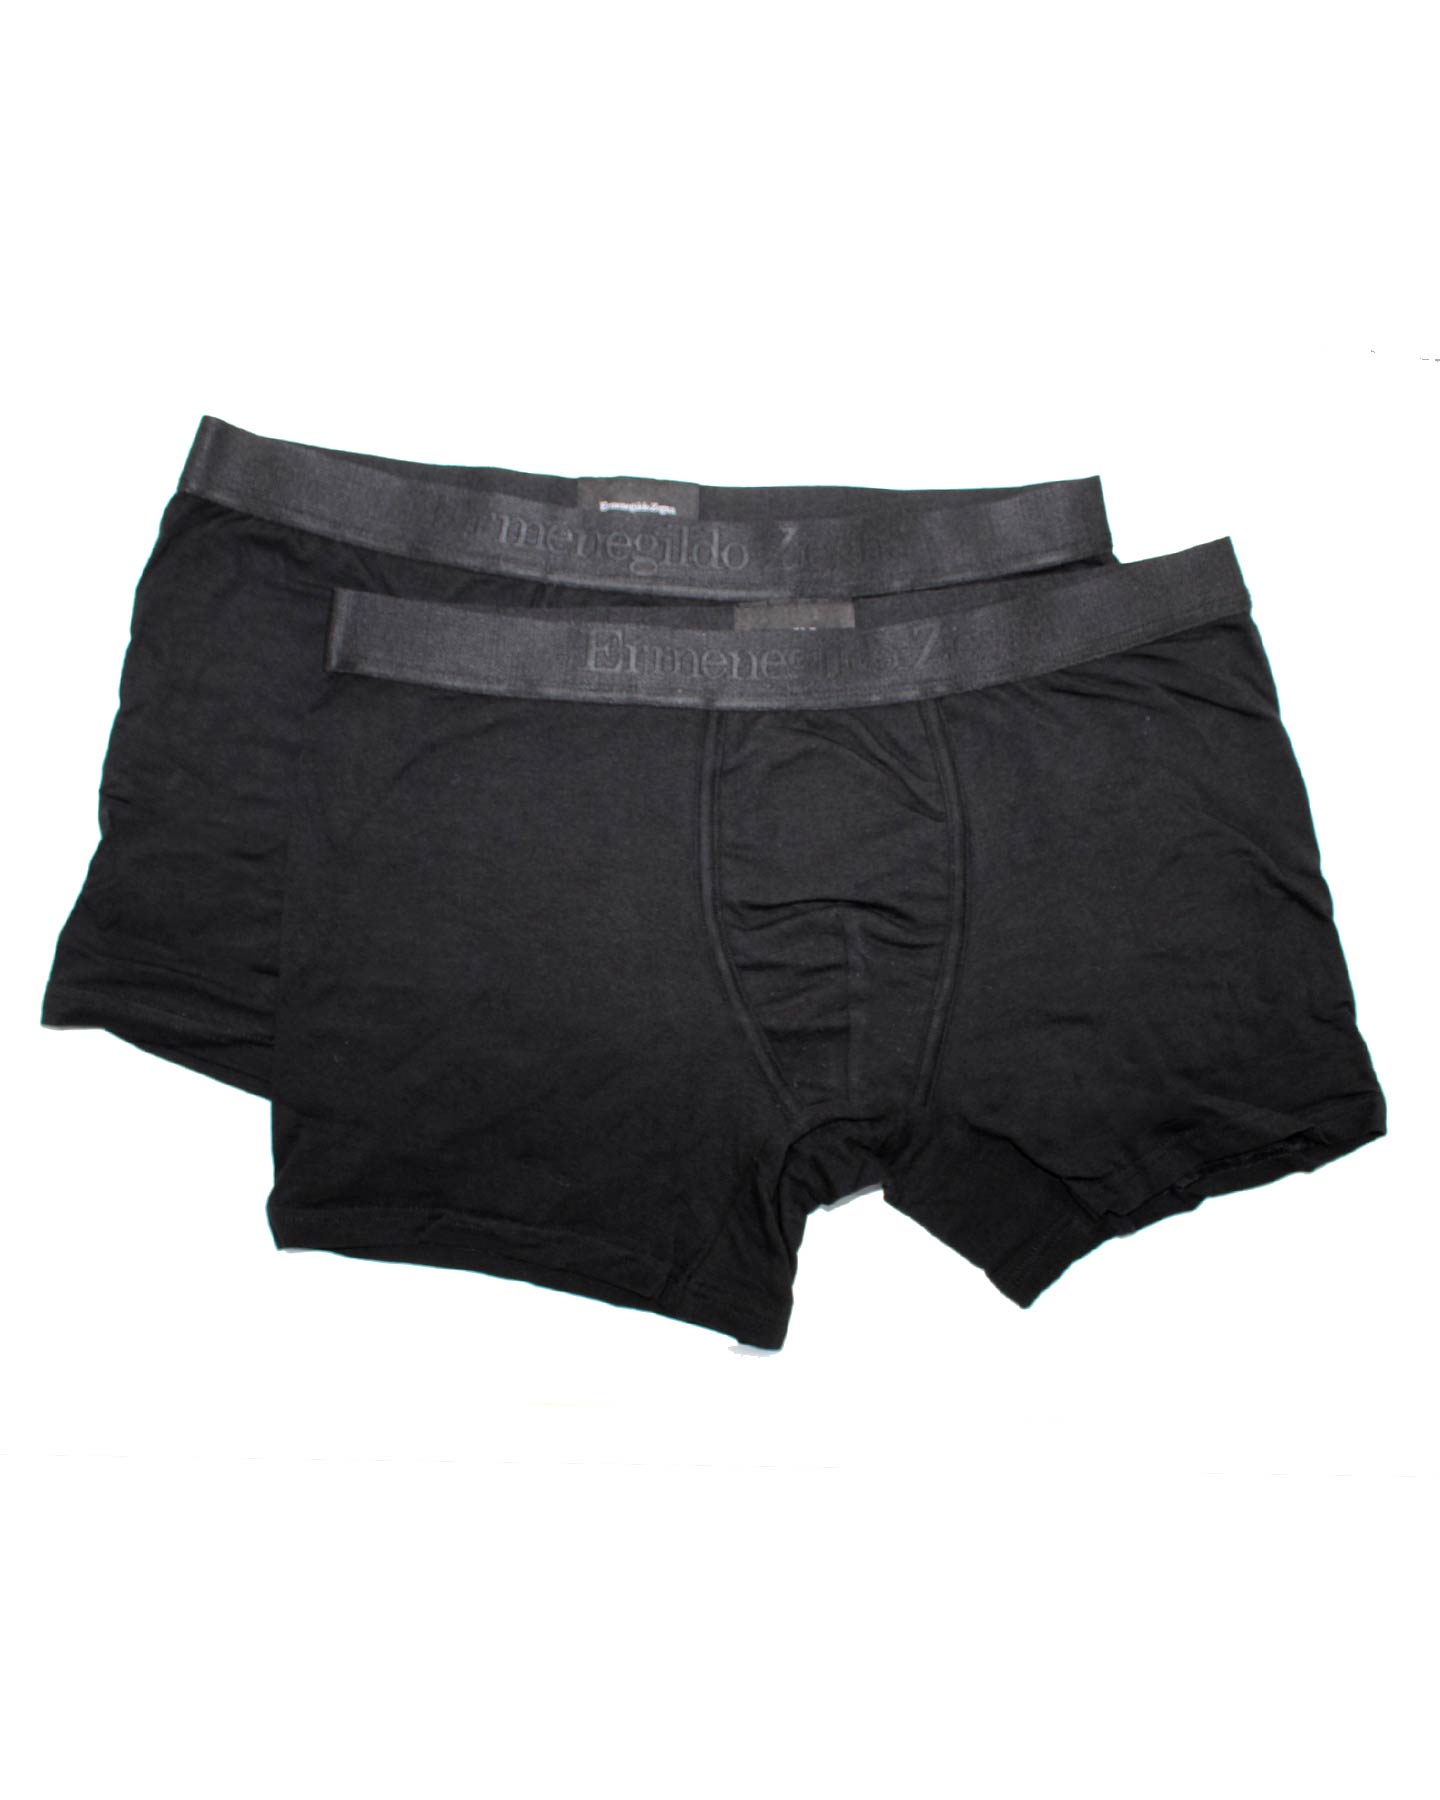 Ermenegildo Zegna Boxer Briefs Black Men Underwear 2 Pack Stretch